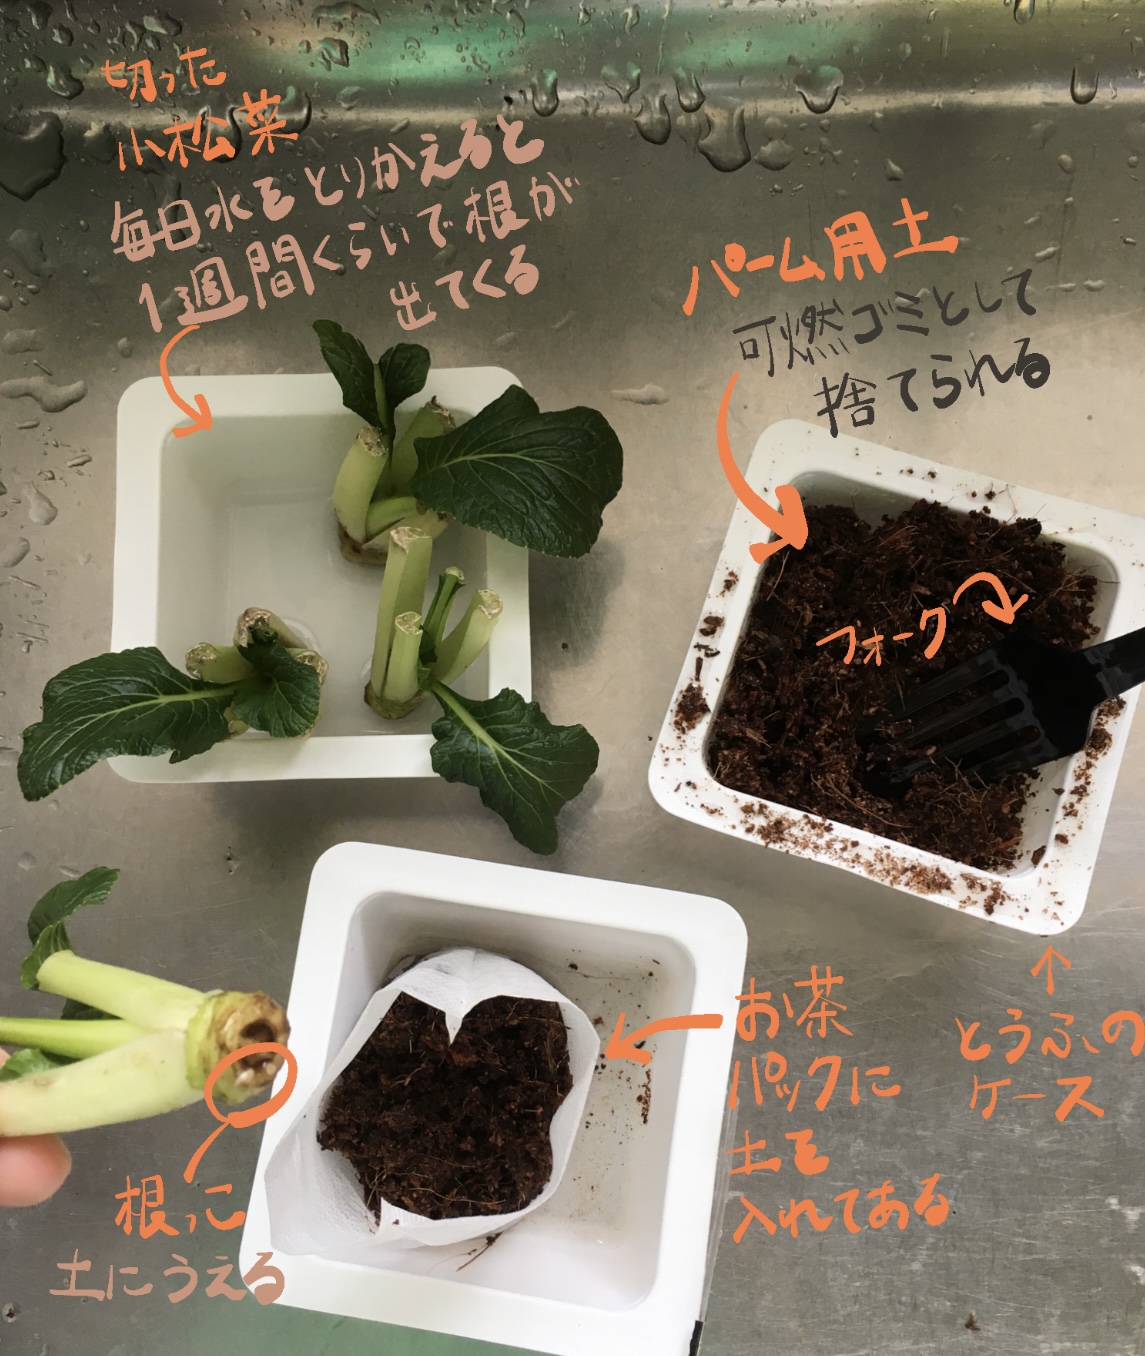 Komatsuna, vegetable, farm